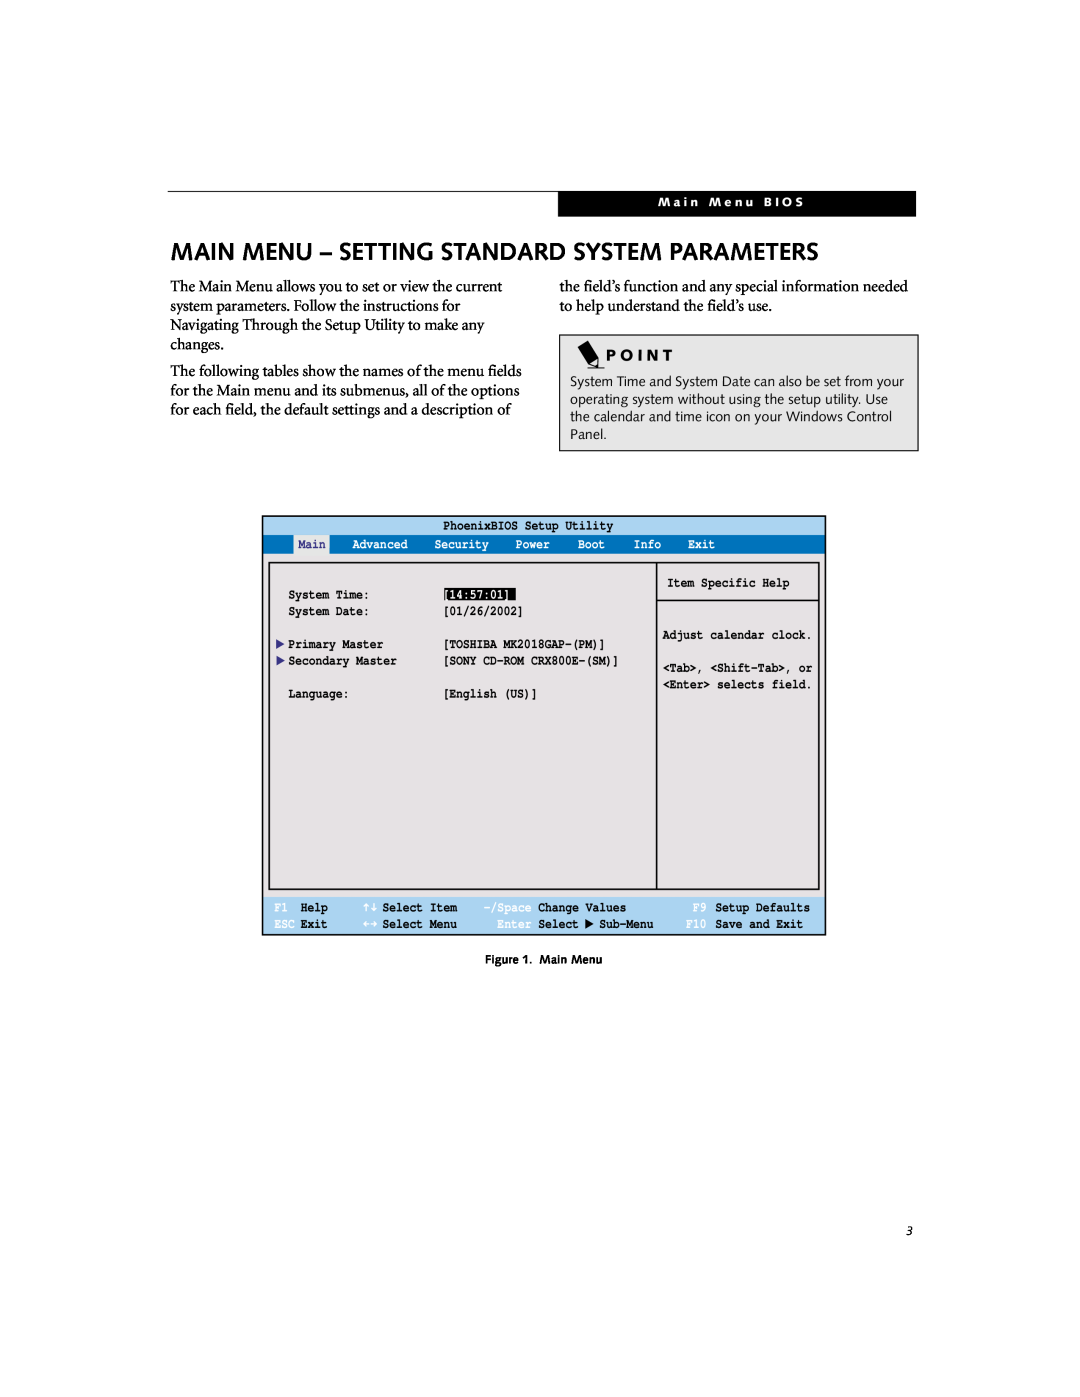 Fujitsu P-2046 manual Main Menu - Setting Standard System Parameters, P O I N T 